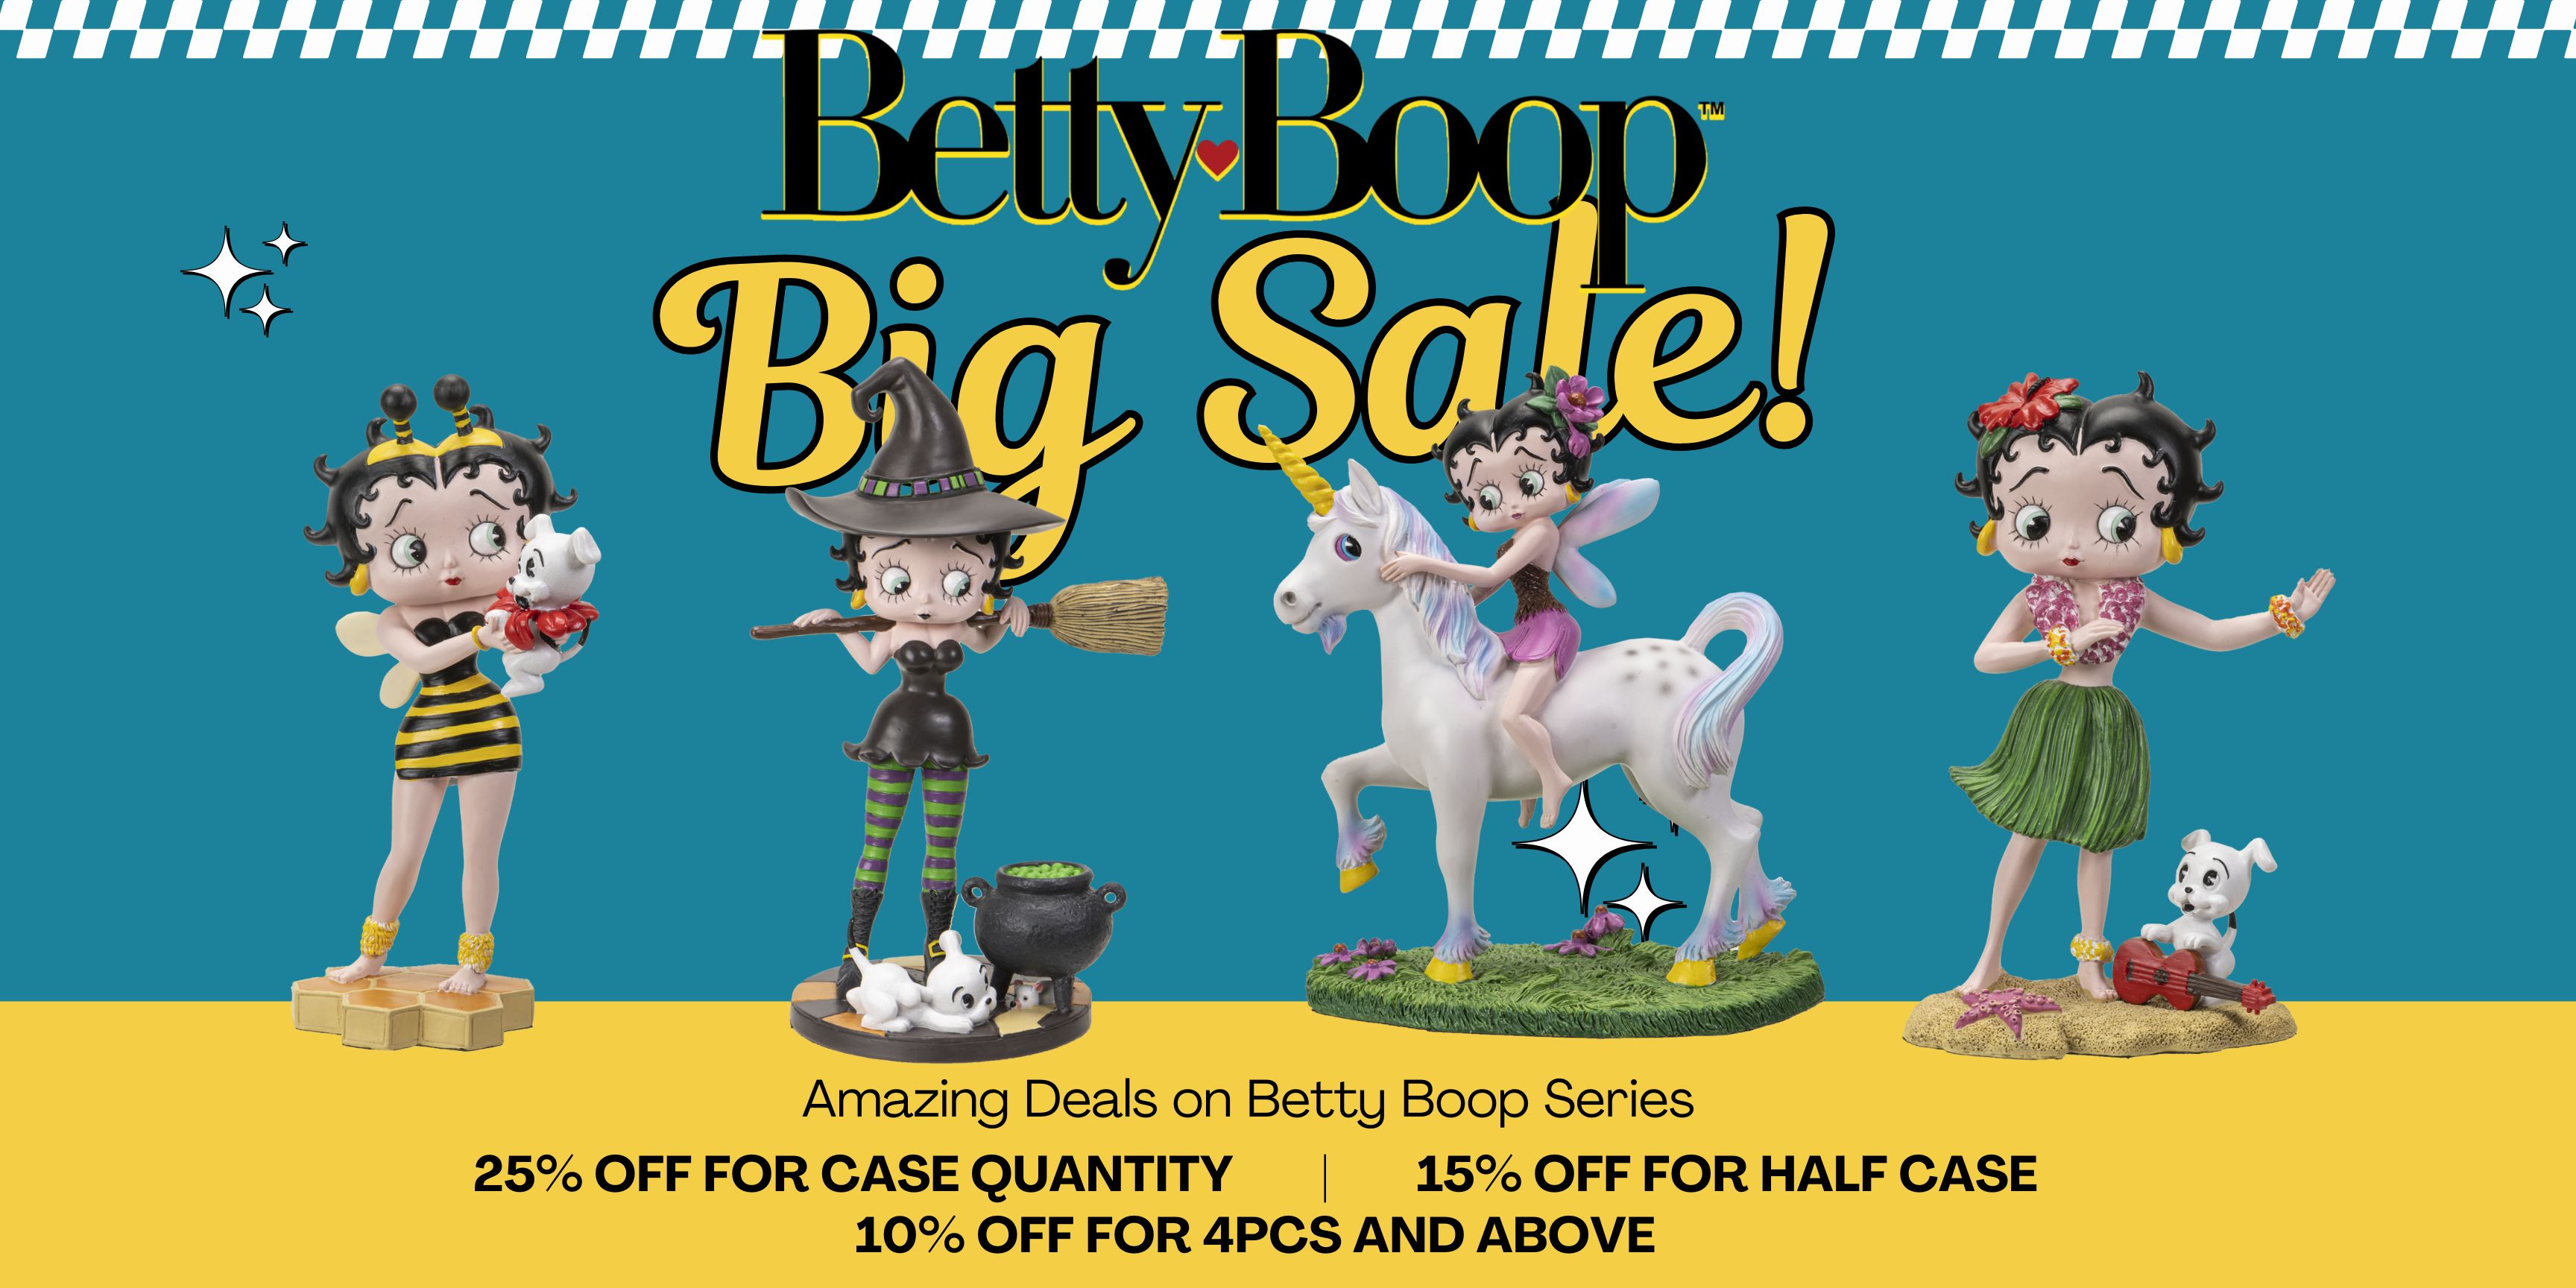 Big Sales Betty Boop